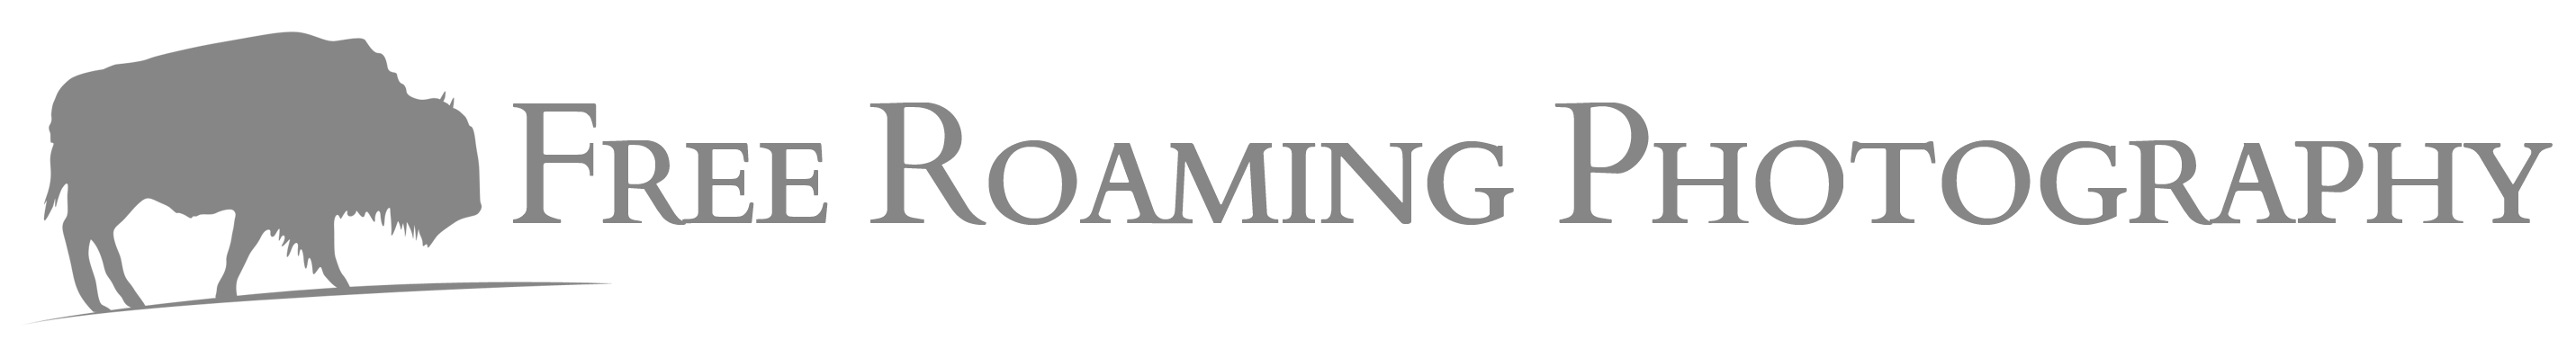 Free Roaming Photography Logo